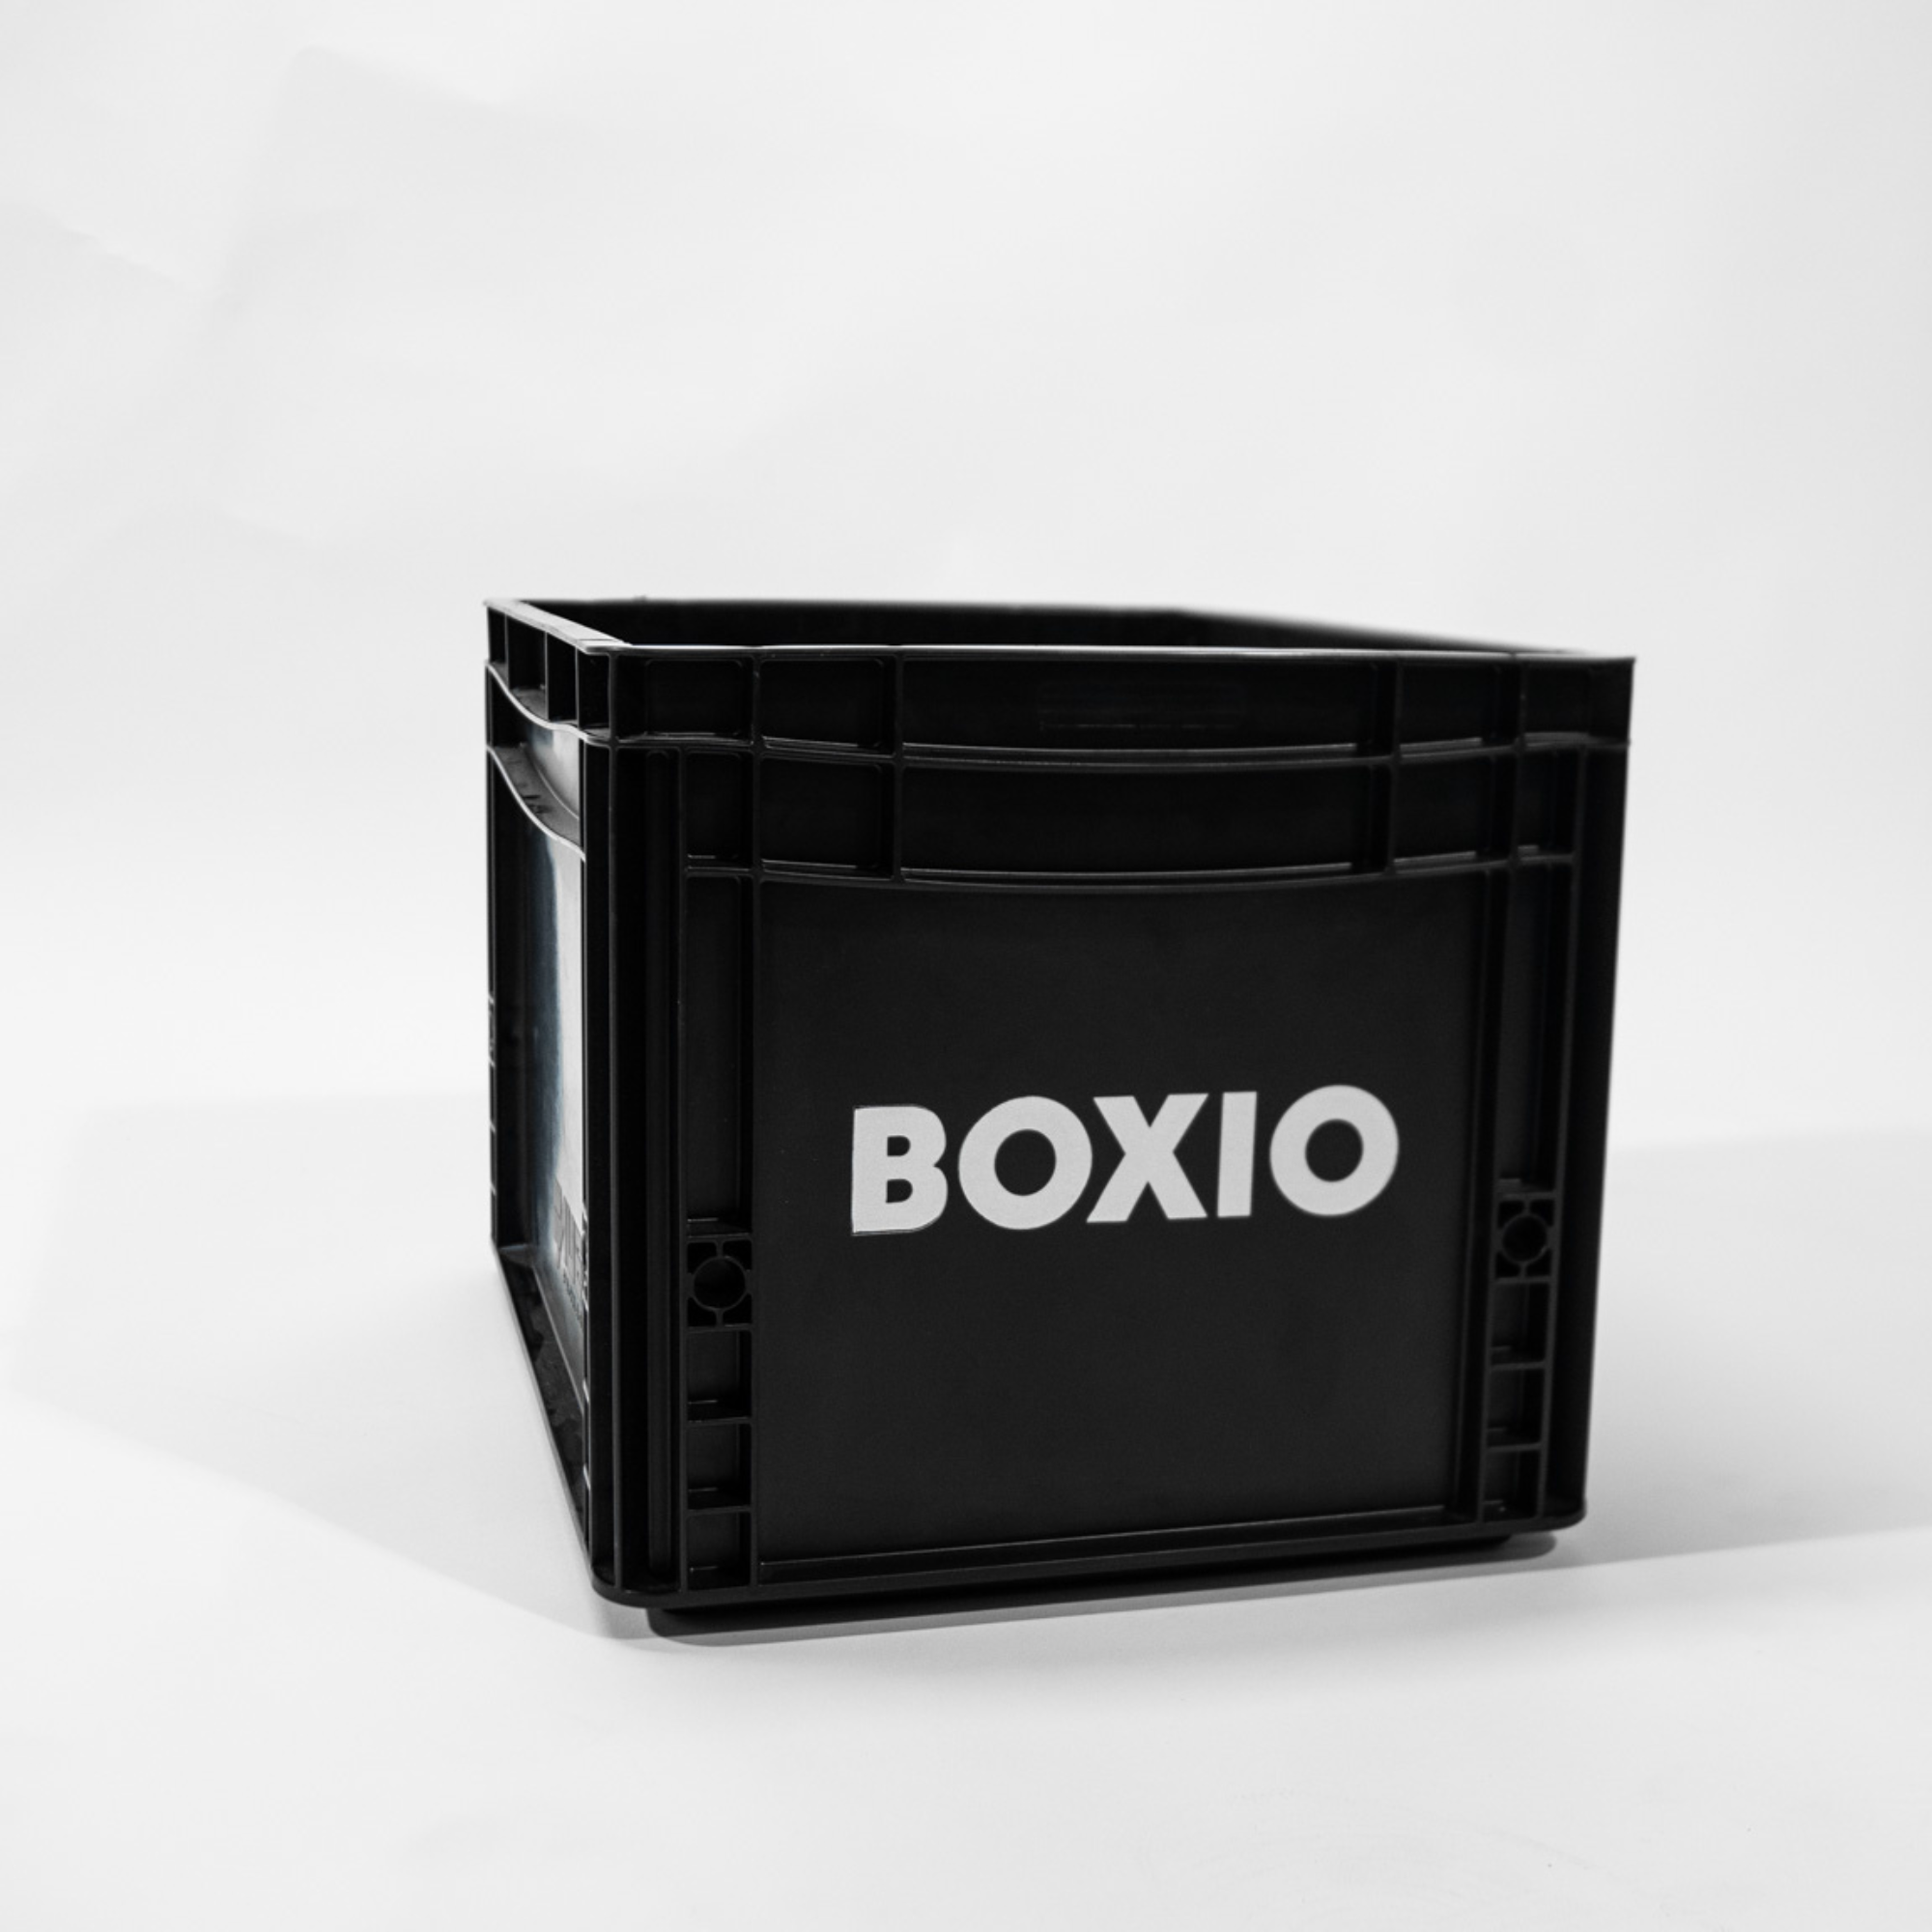 Eurobox "BOXIO" with drill holes for BOXIO - TOILET